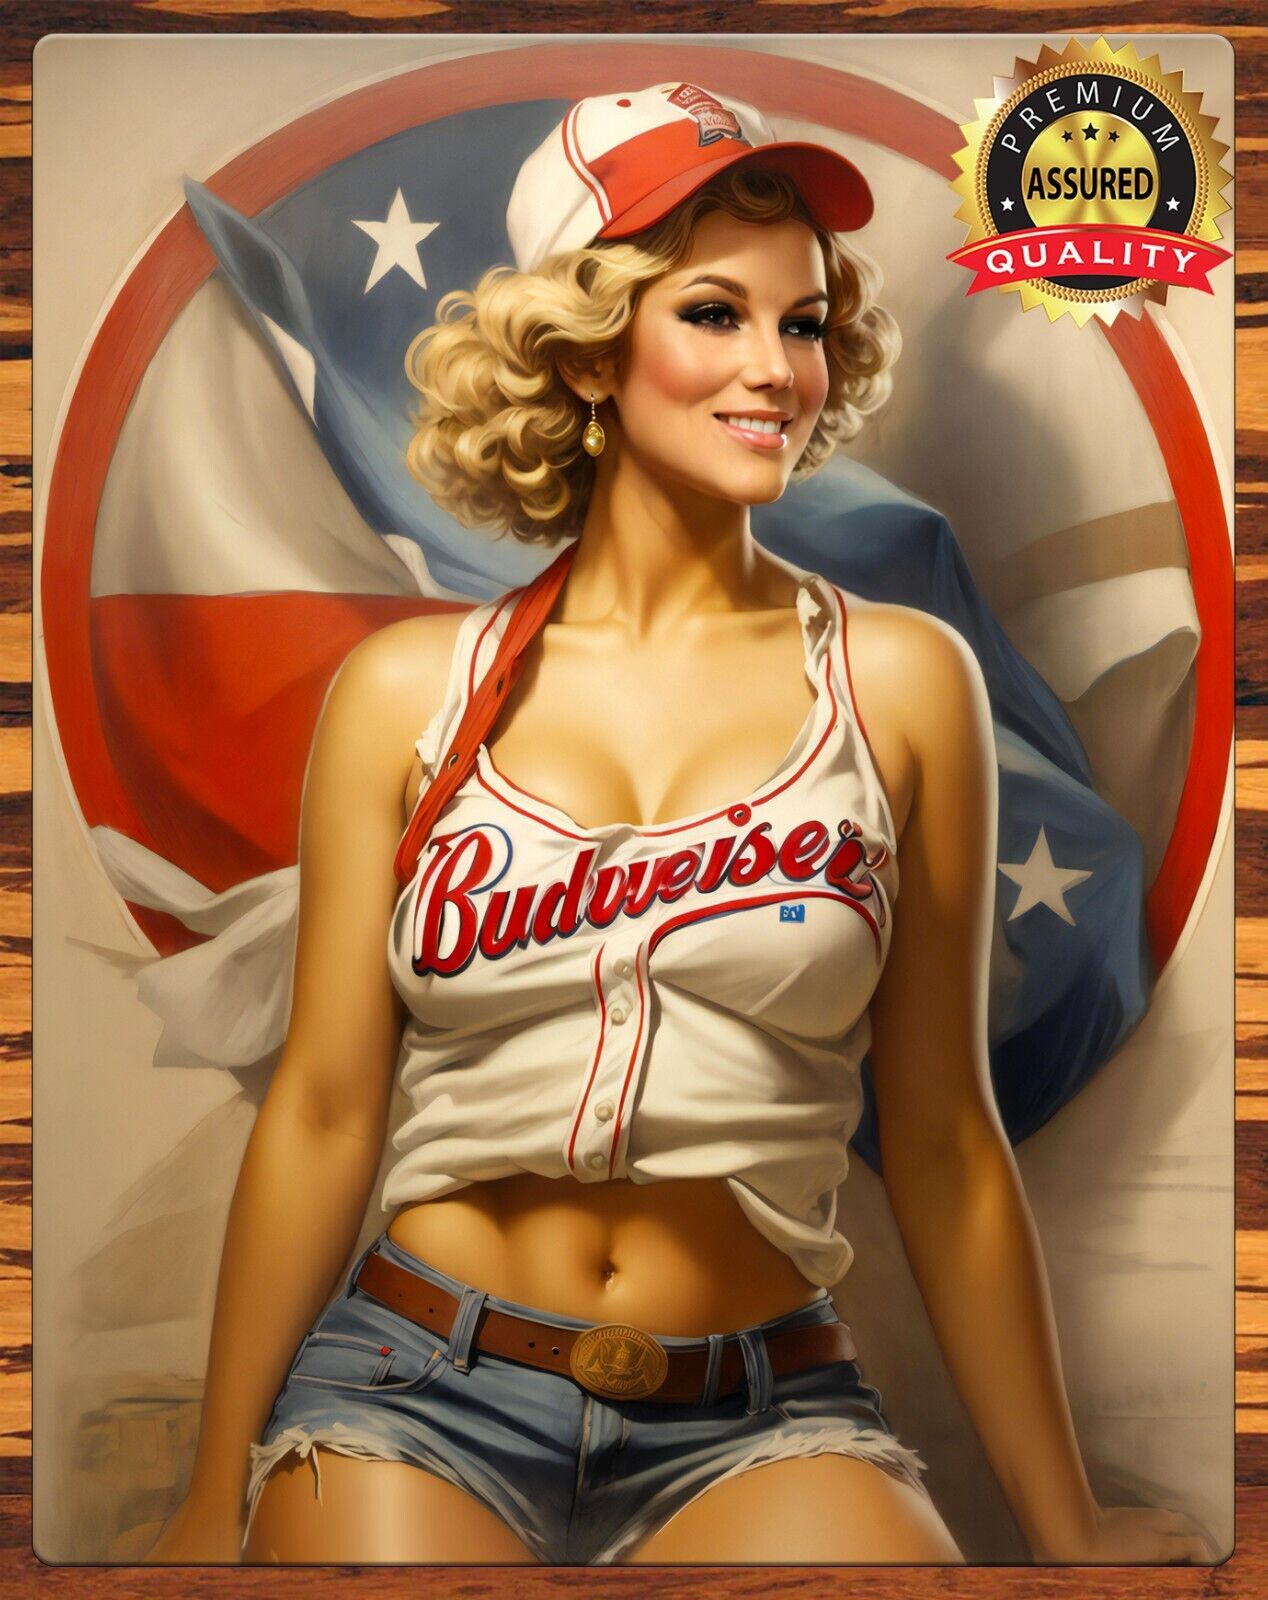 Budweiser - All American Girl - Rare - Metal Sign 11 x 14